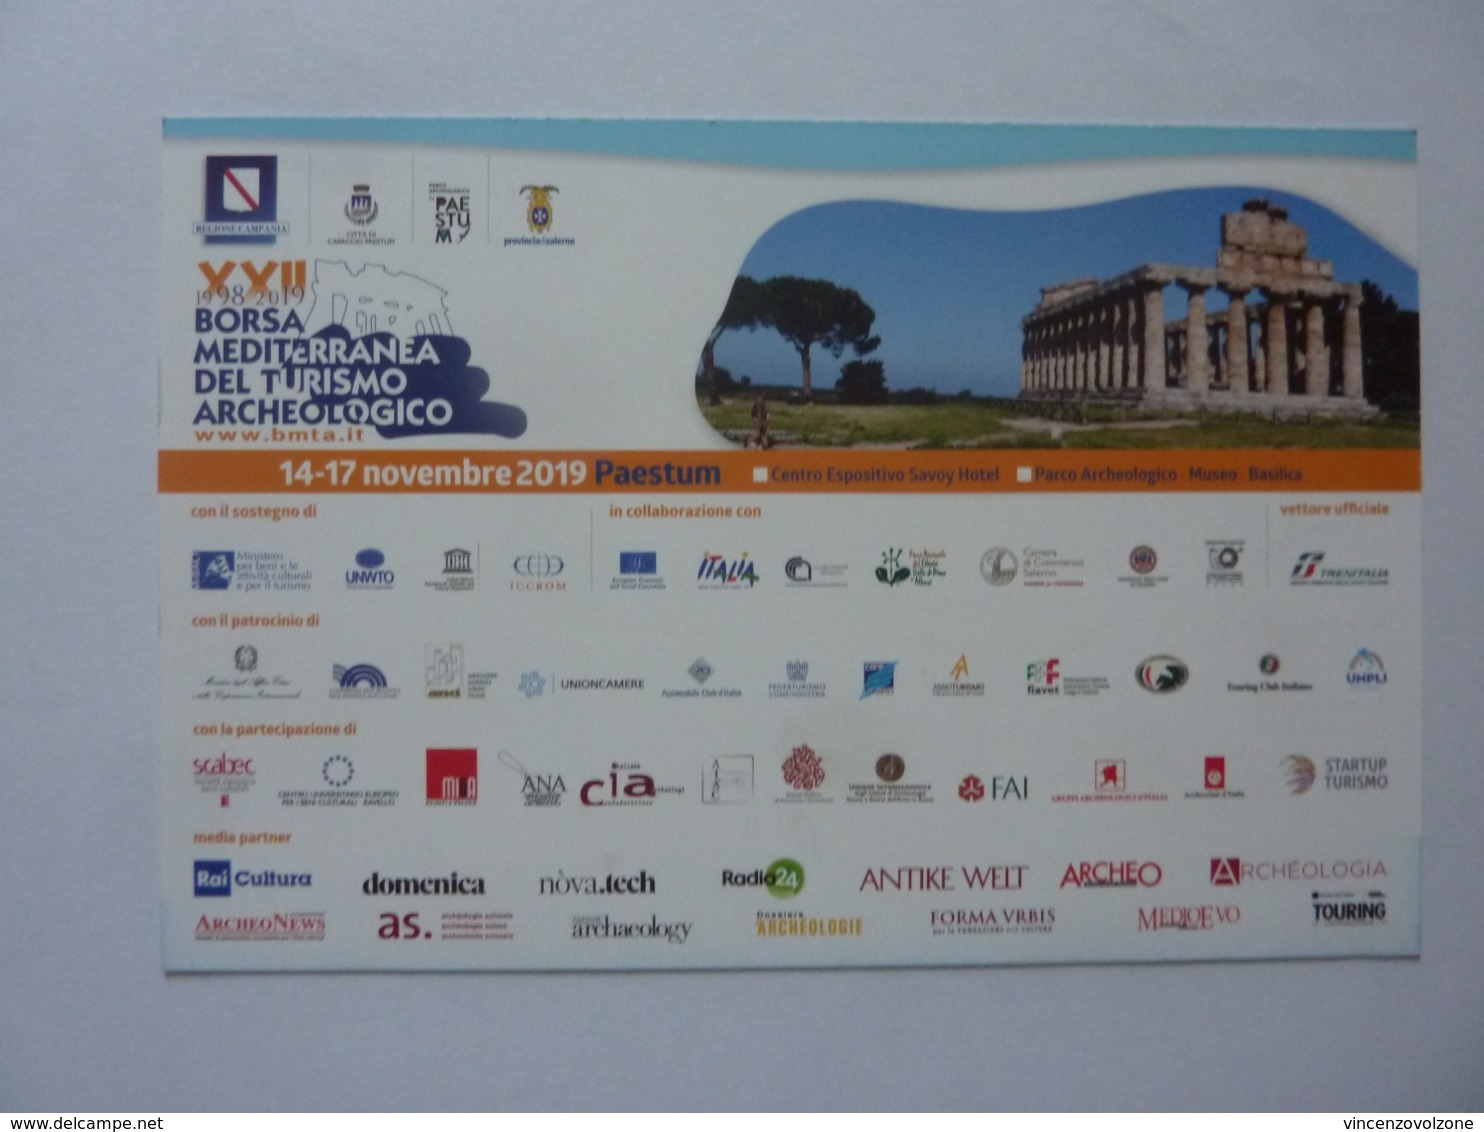 Cartolina Pubblicitaria "XVII BORSA ARCHEOLOGICA DEL TURISMO PAESTUM 1998 - 2019" - Manifestazioni